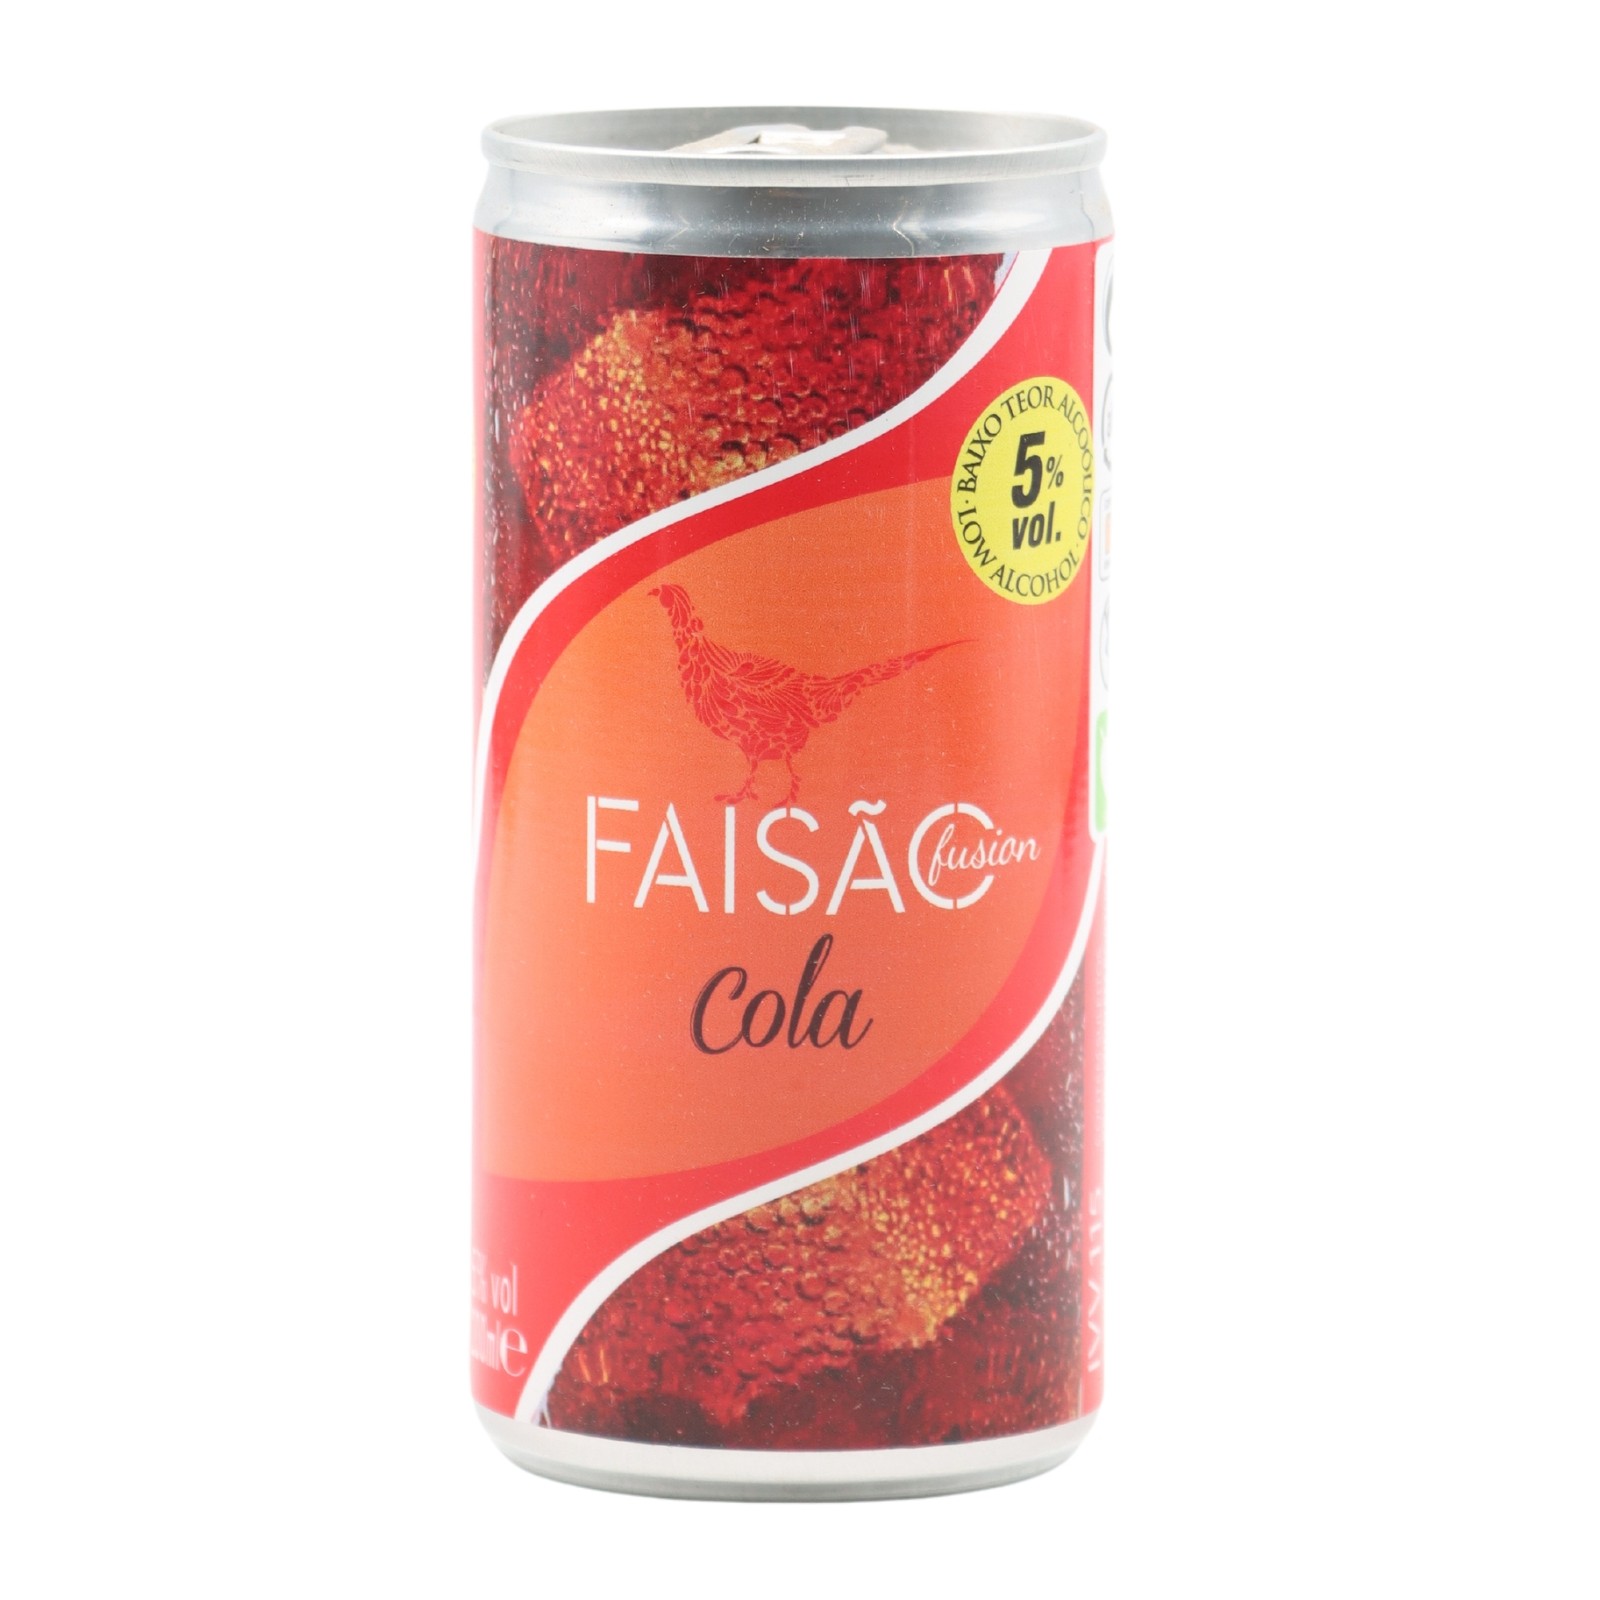 Faisão Fusion Cola in der Dose